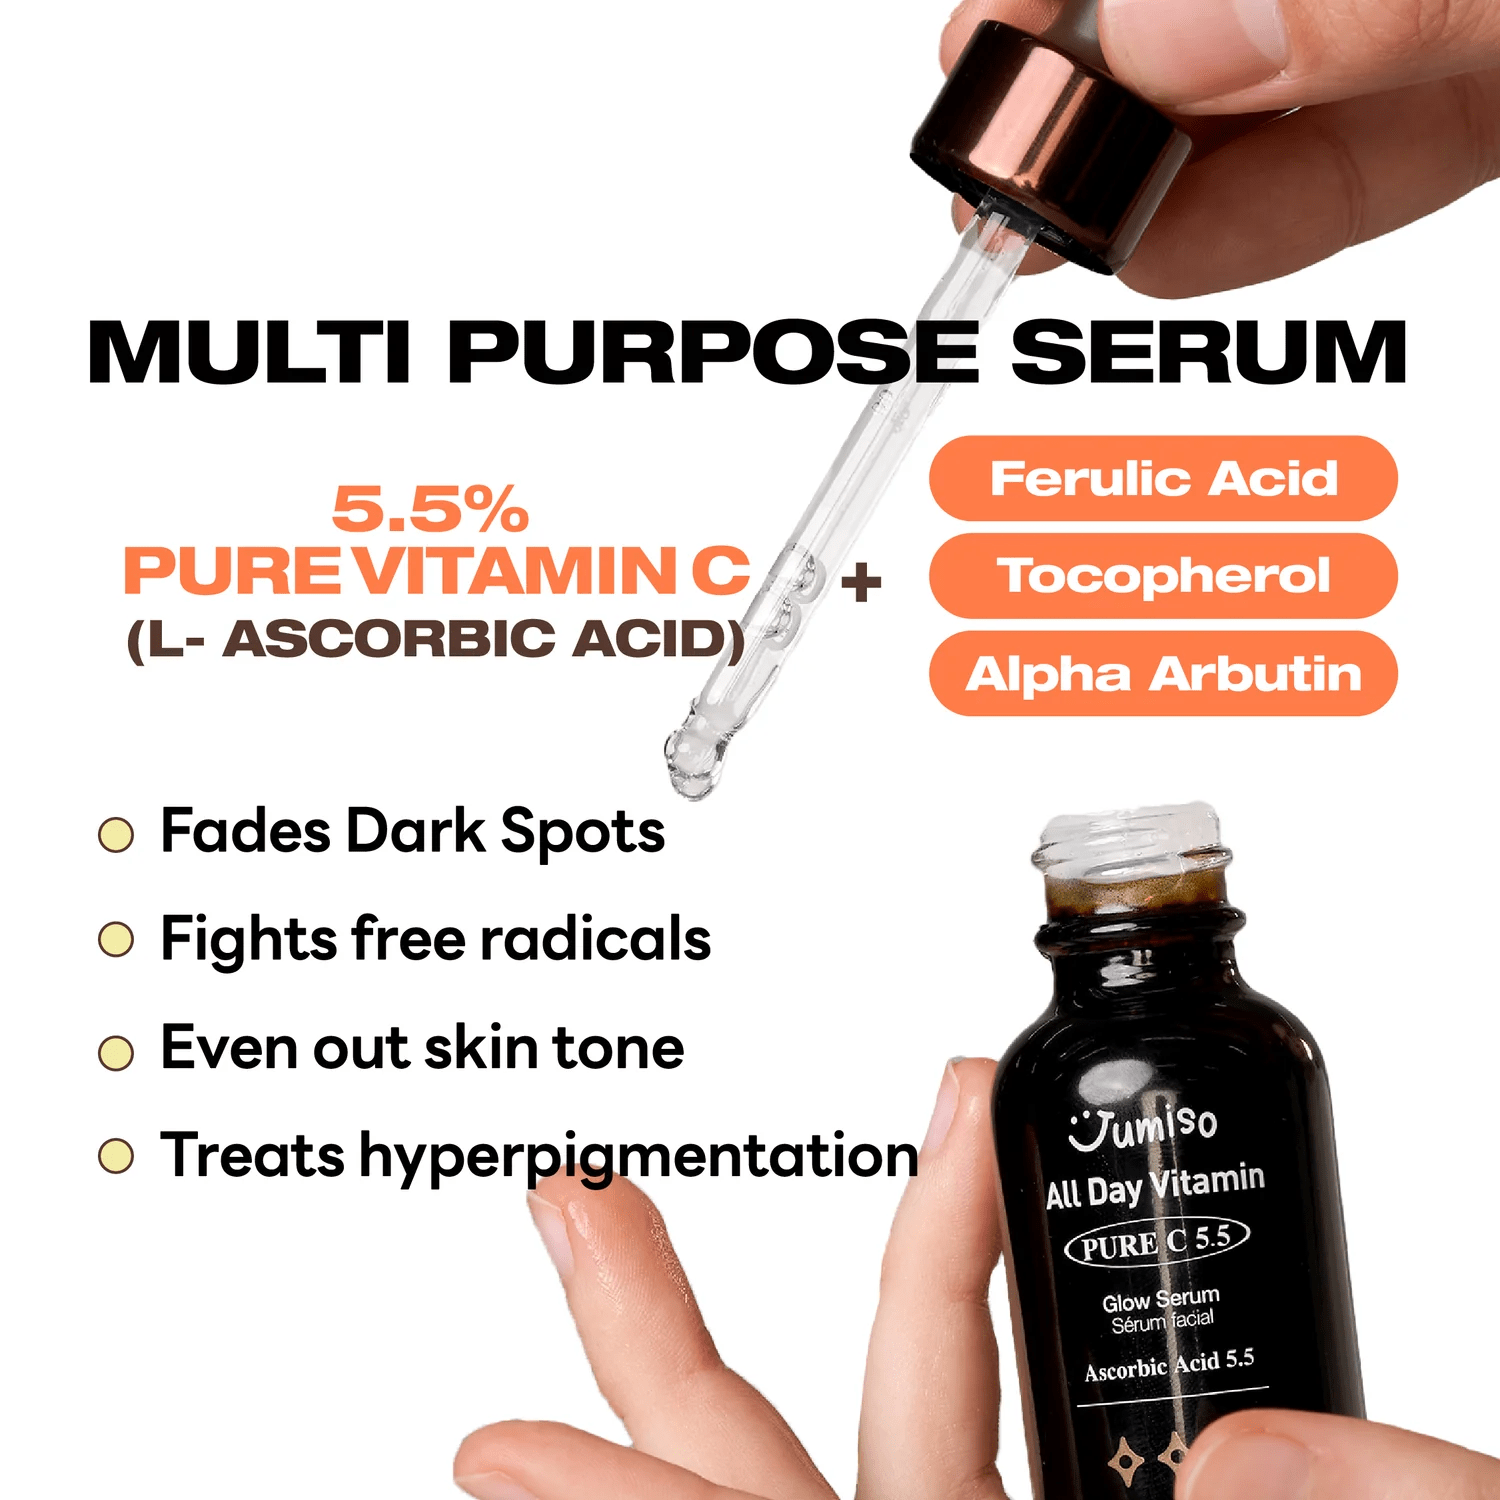 skincare-kbeauty-glowtime-jumiso all day vitamin pure C 5.5 glow serum